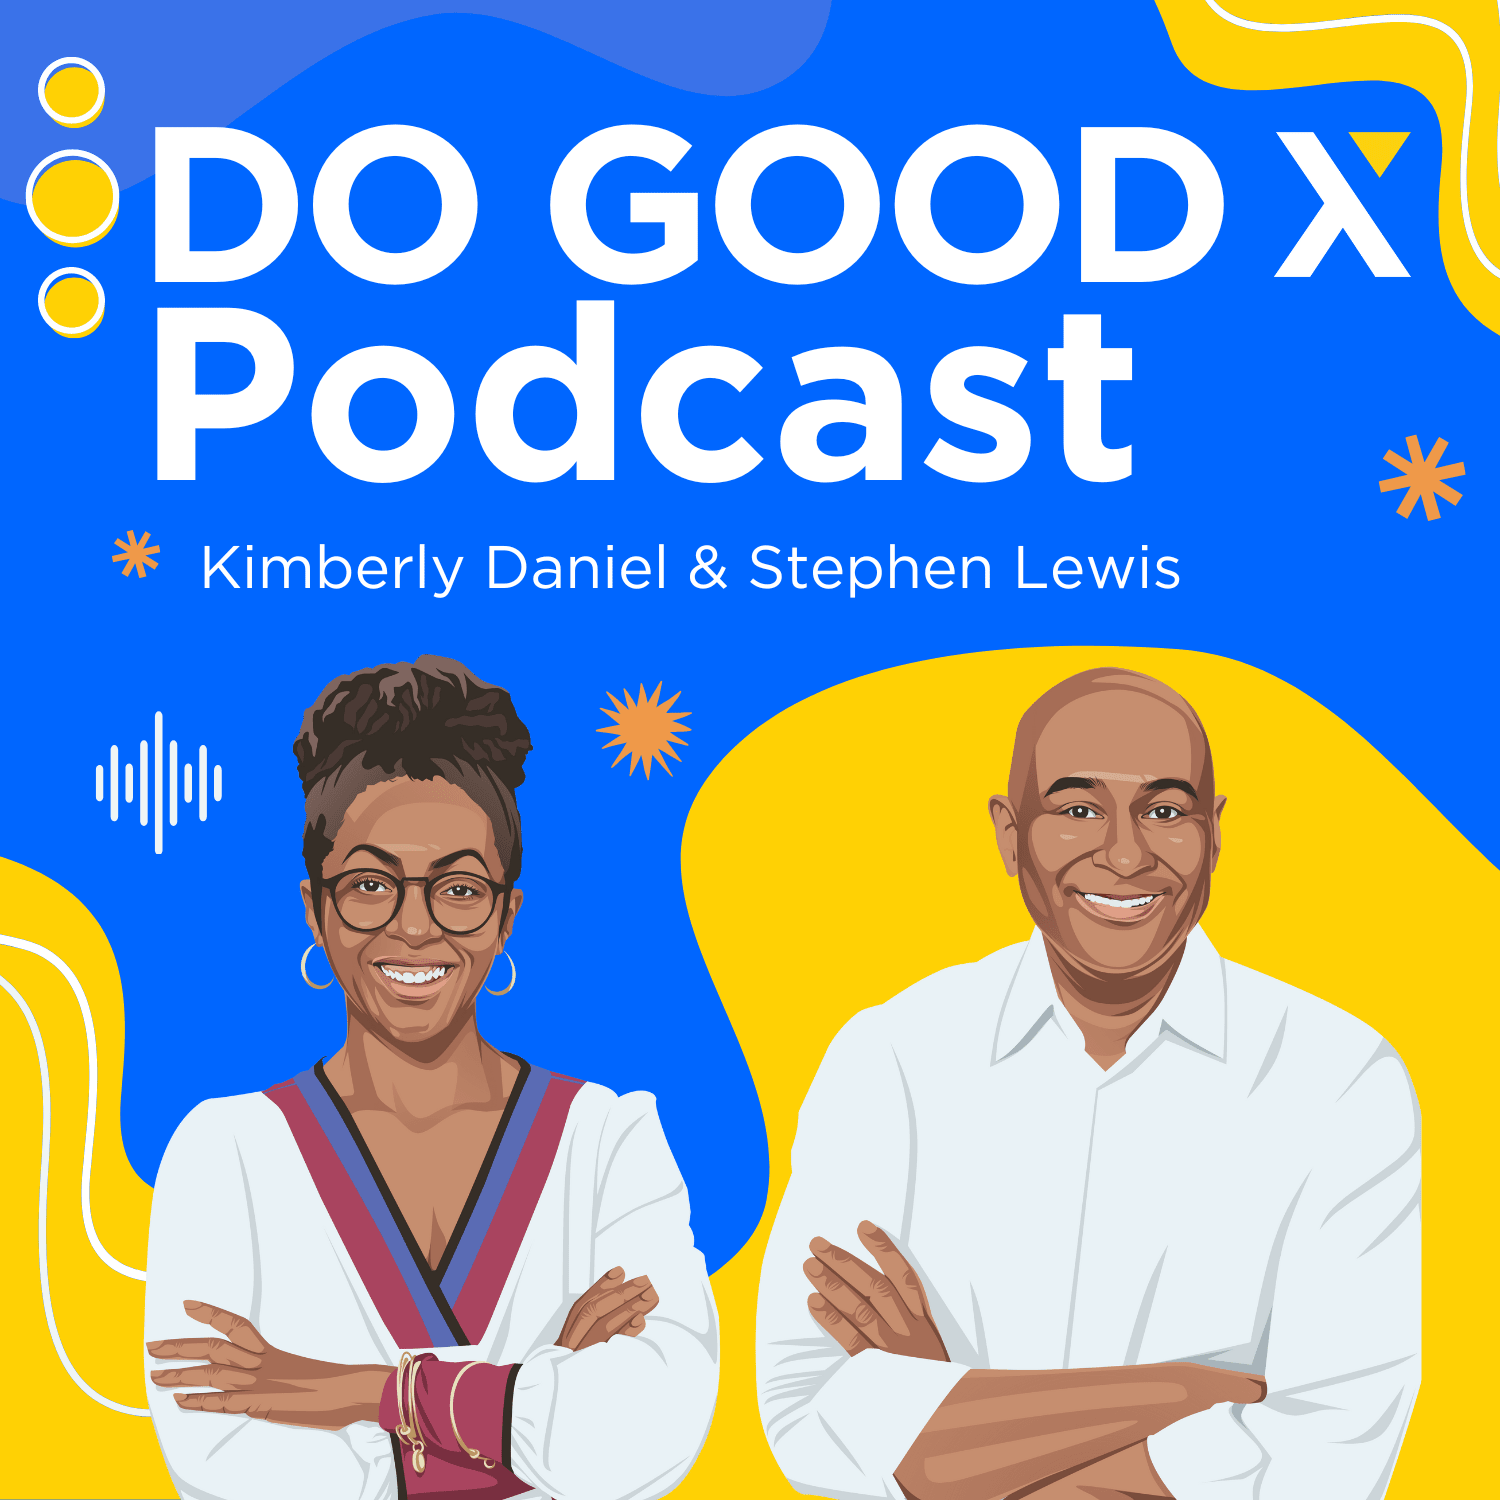 DO GOOD X Podcast